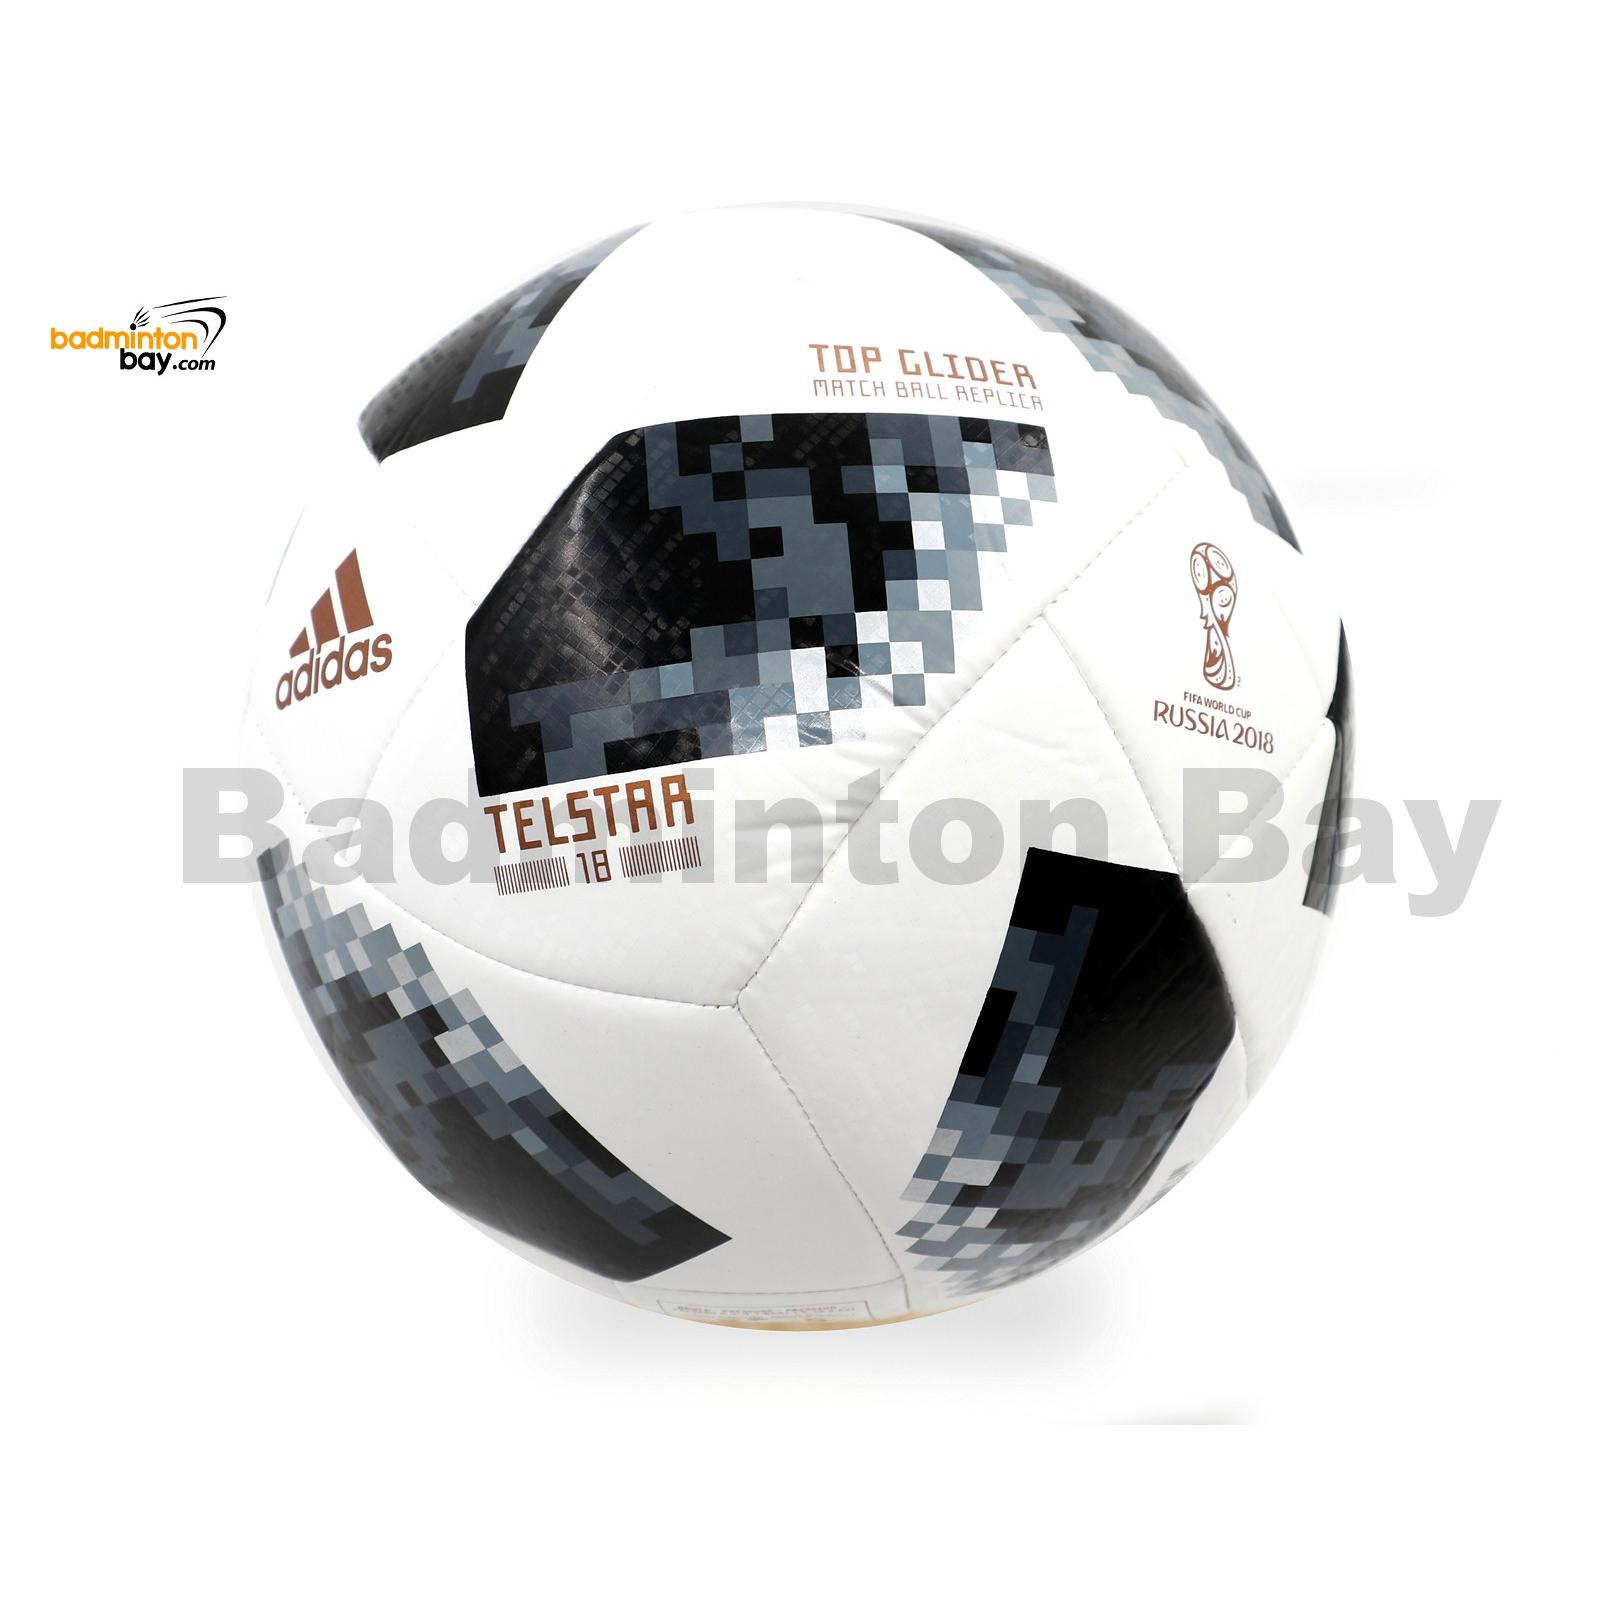 Nacarado Altitud Disfraces Genuine Adidas FIFA World Cup 2018 Telstar 18 Top Glider Ball Soccer  Football Size 5 Russia